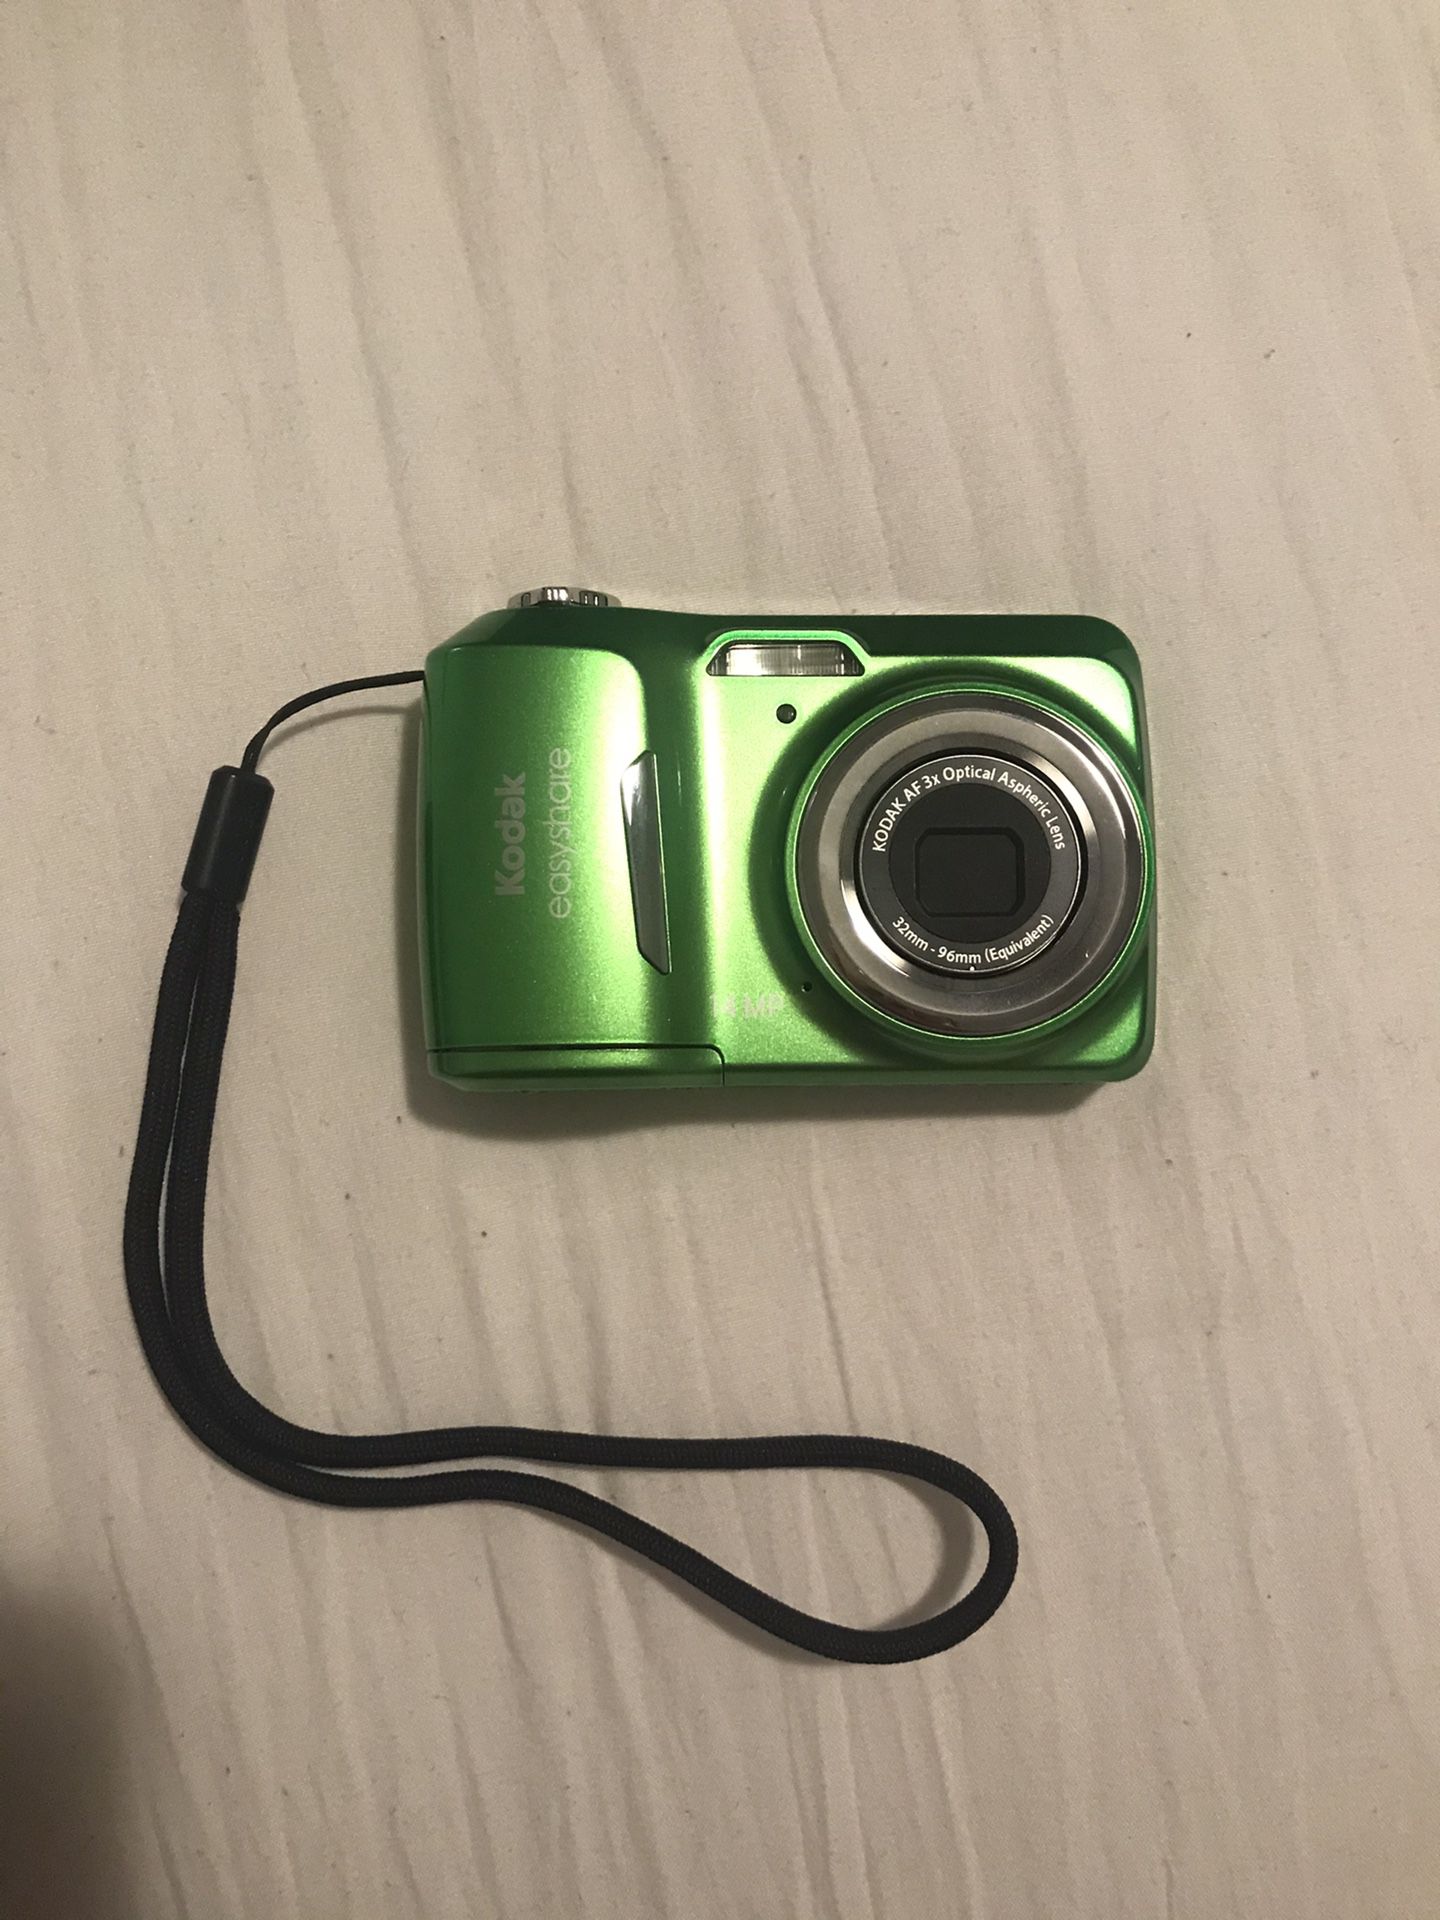 Kodak EasyShare digital camera